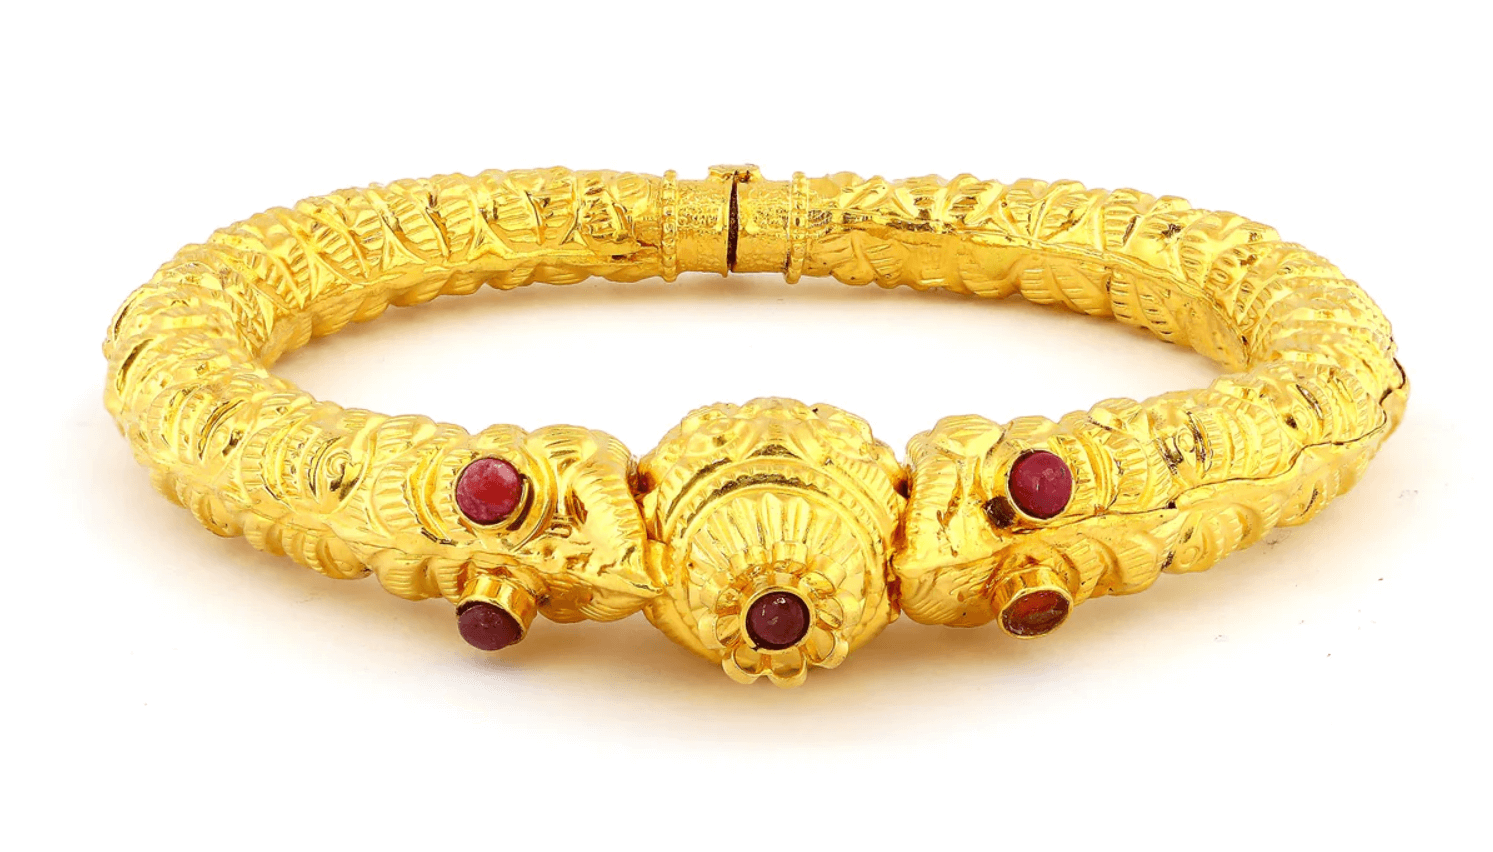 Divine Charms Bangle - Ganesh Chaturthi Jewellery Designs